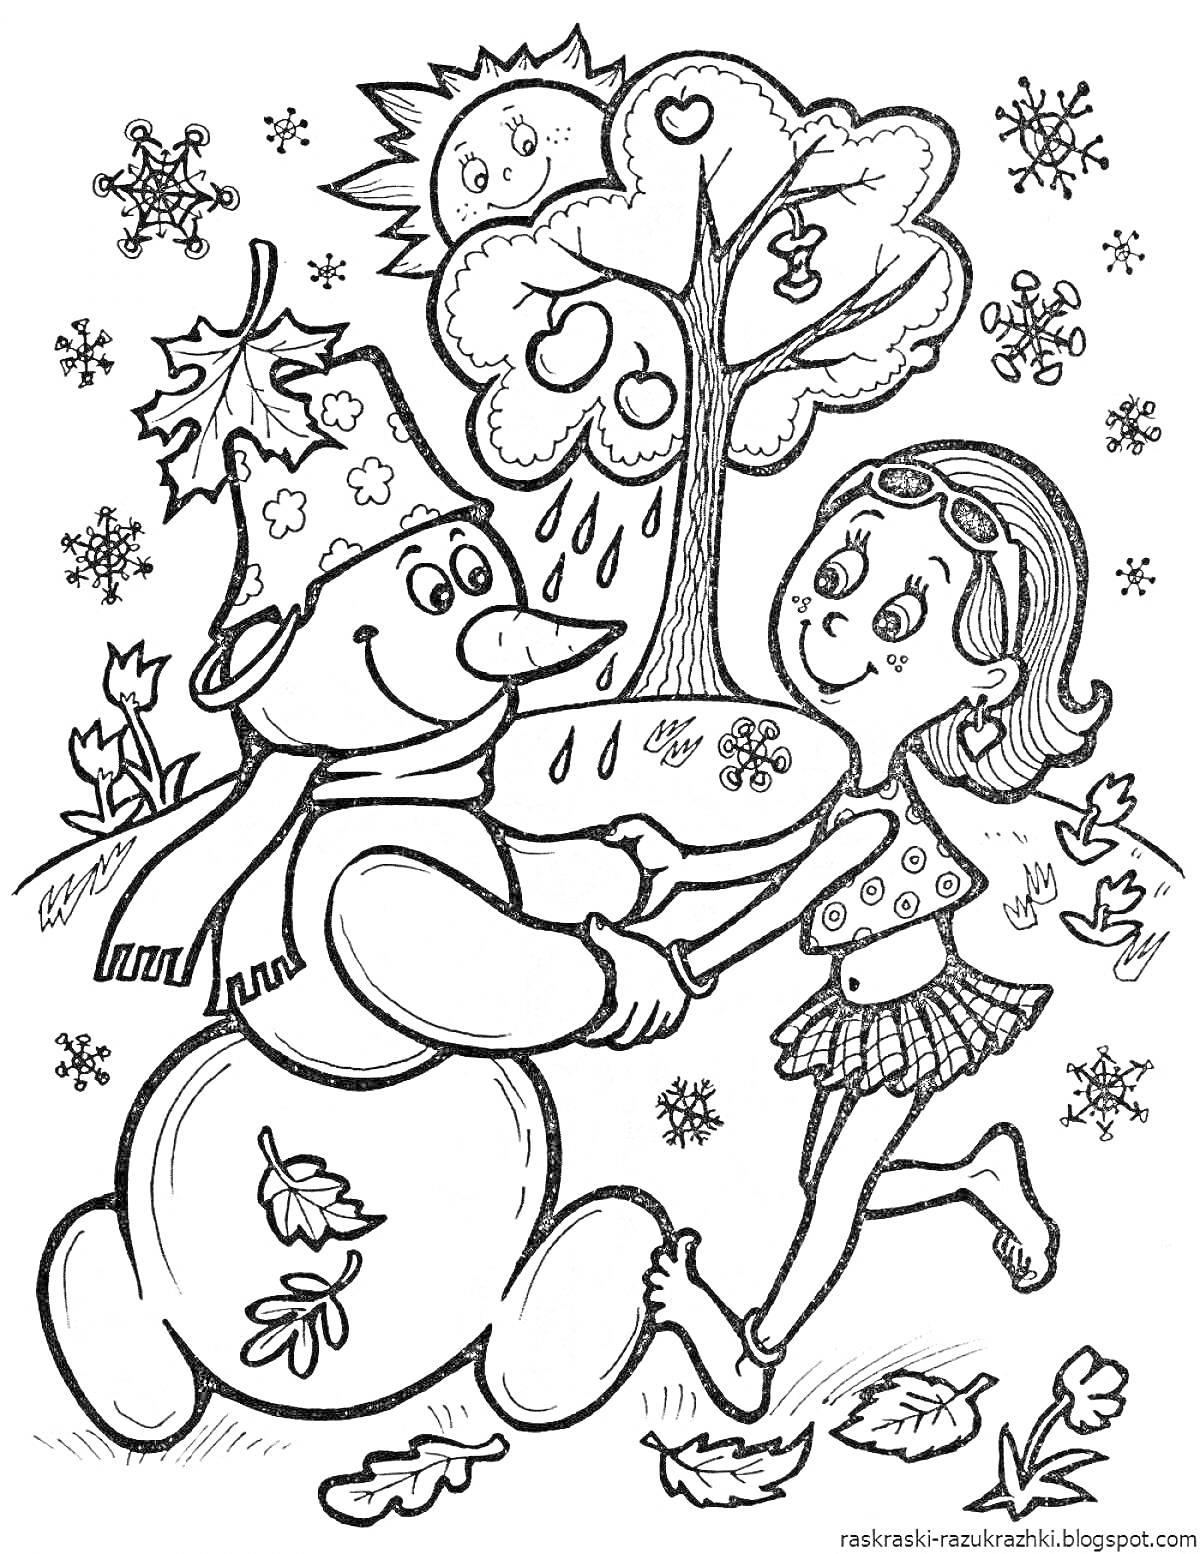 Раскраска Девочка и снеговик танцуют на фоне дерева с символами времён года (солнце, тучи, снежинки, капли дождя и листья)